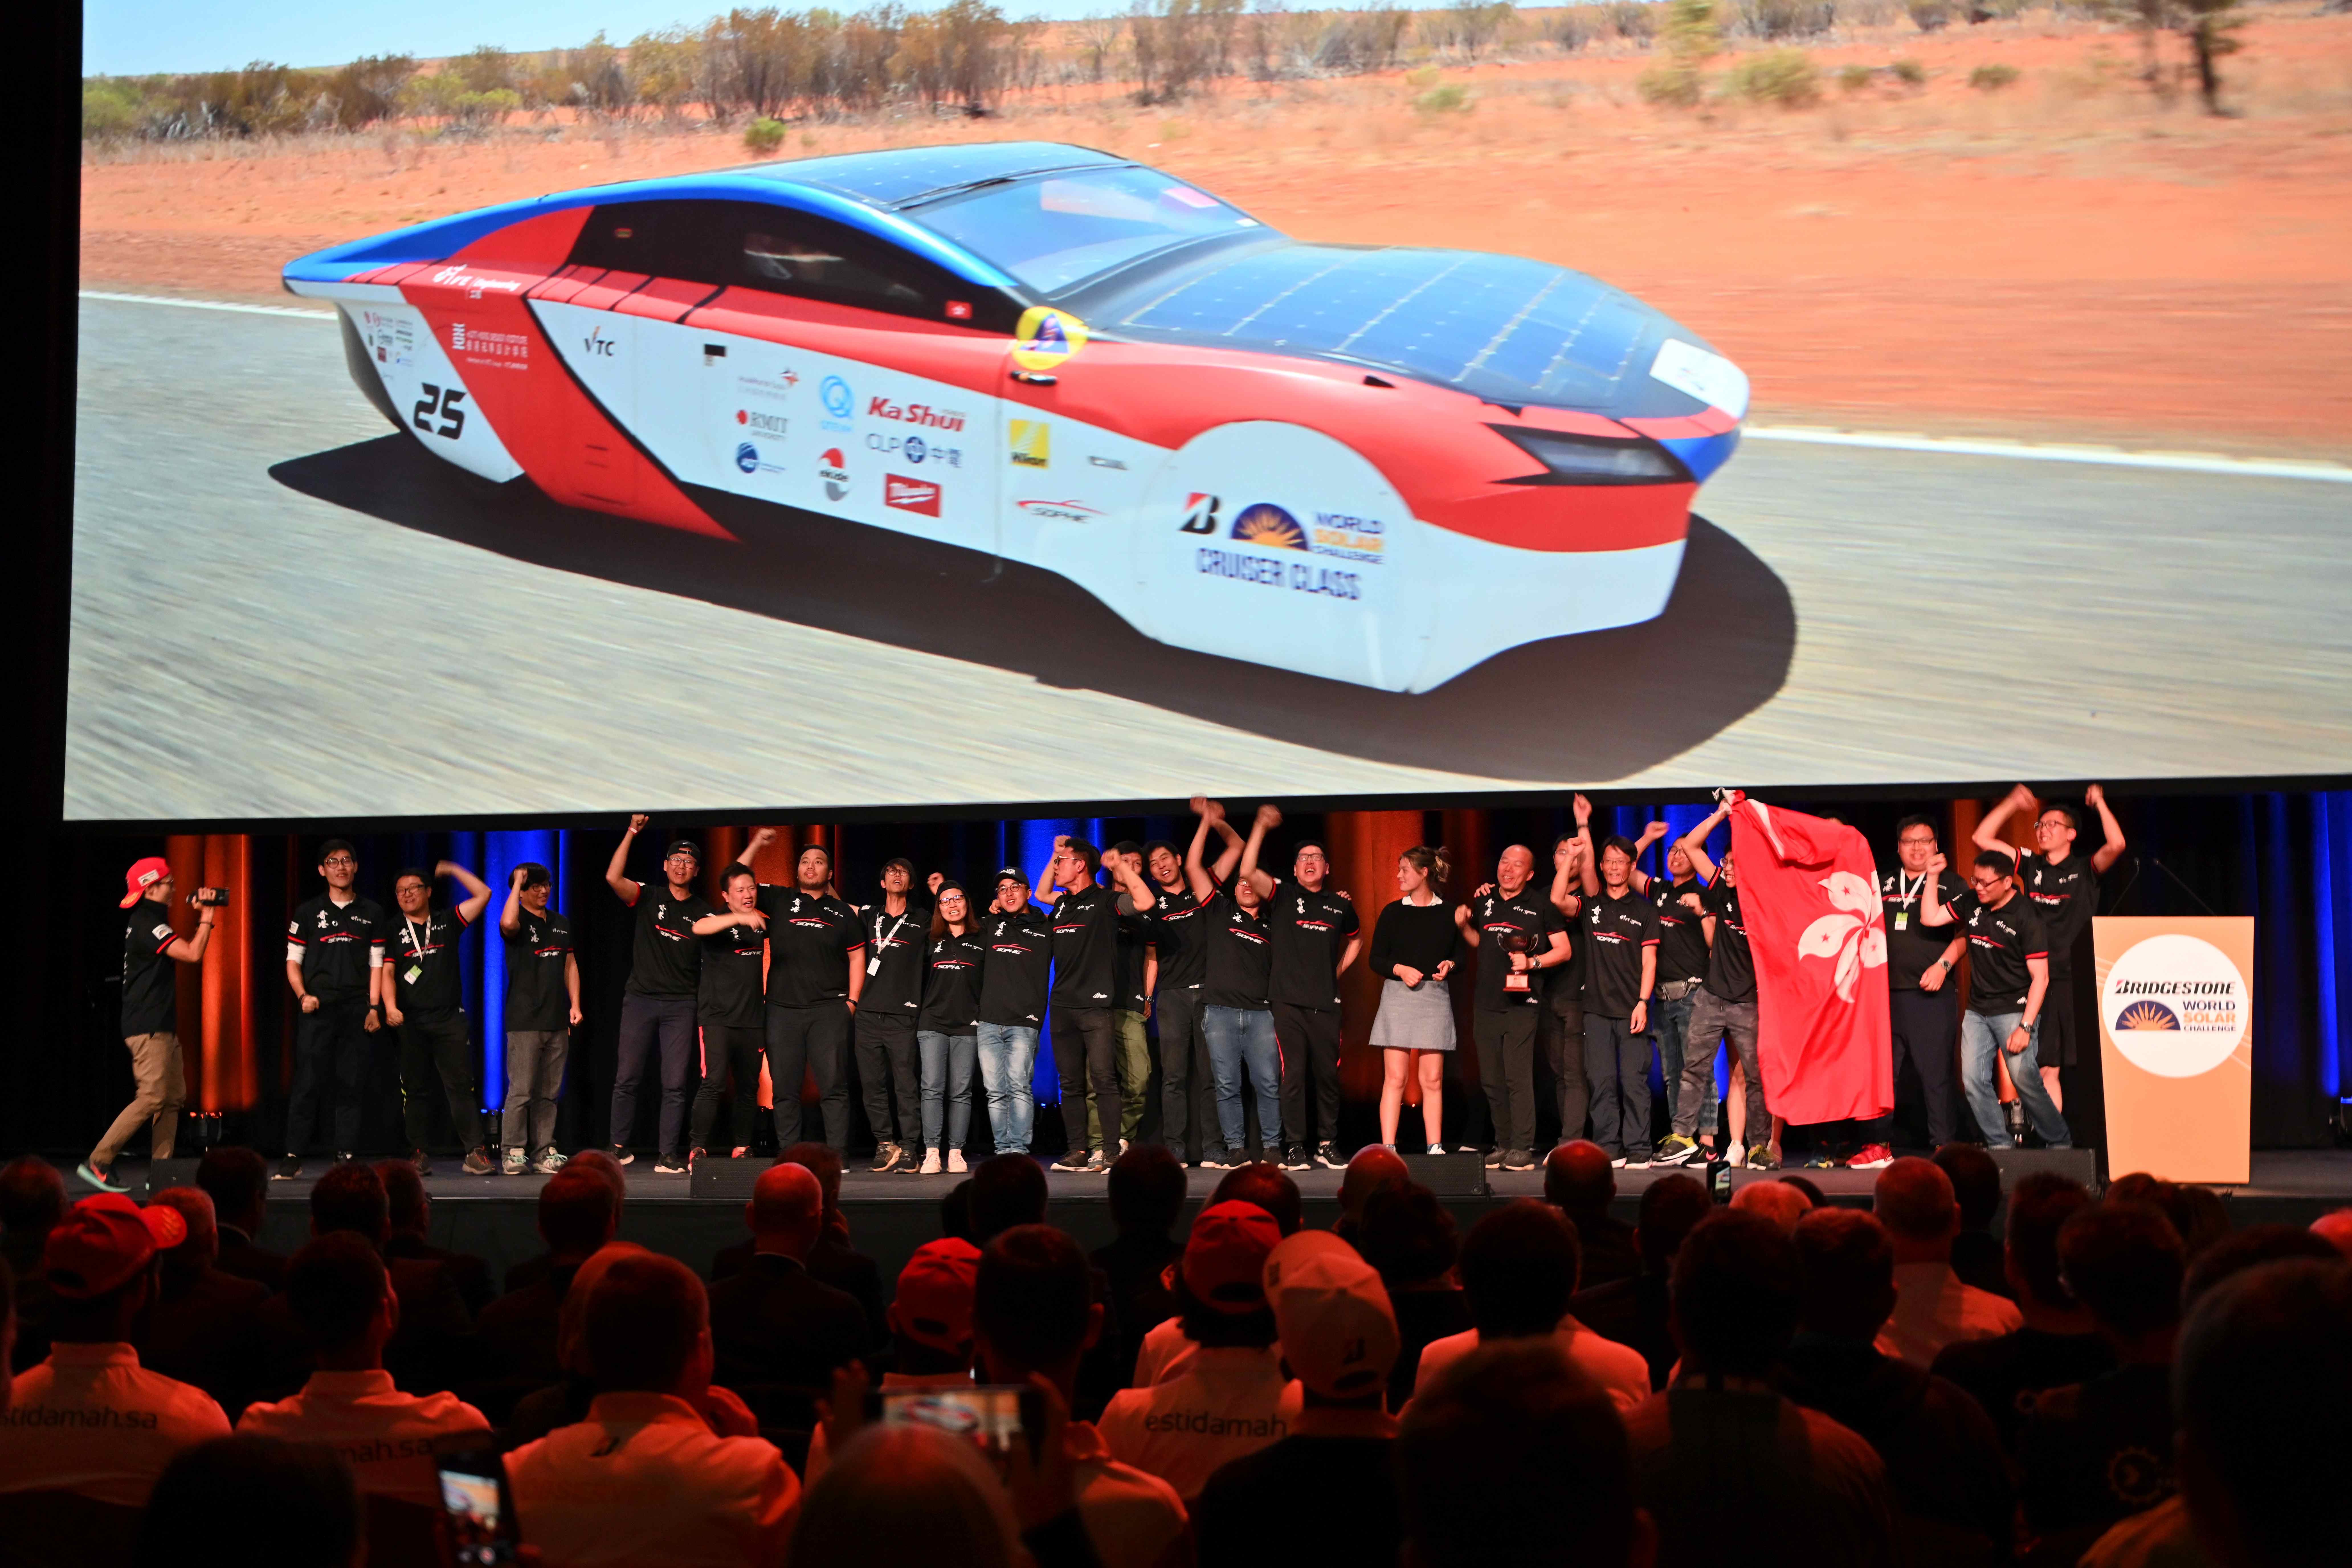 IVE工程太陽能車SOPHIE 6s揚威國際
勇奪澳洲「世界太陽能車挑戰賽」季軍